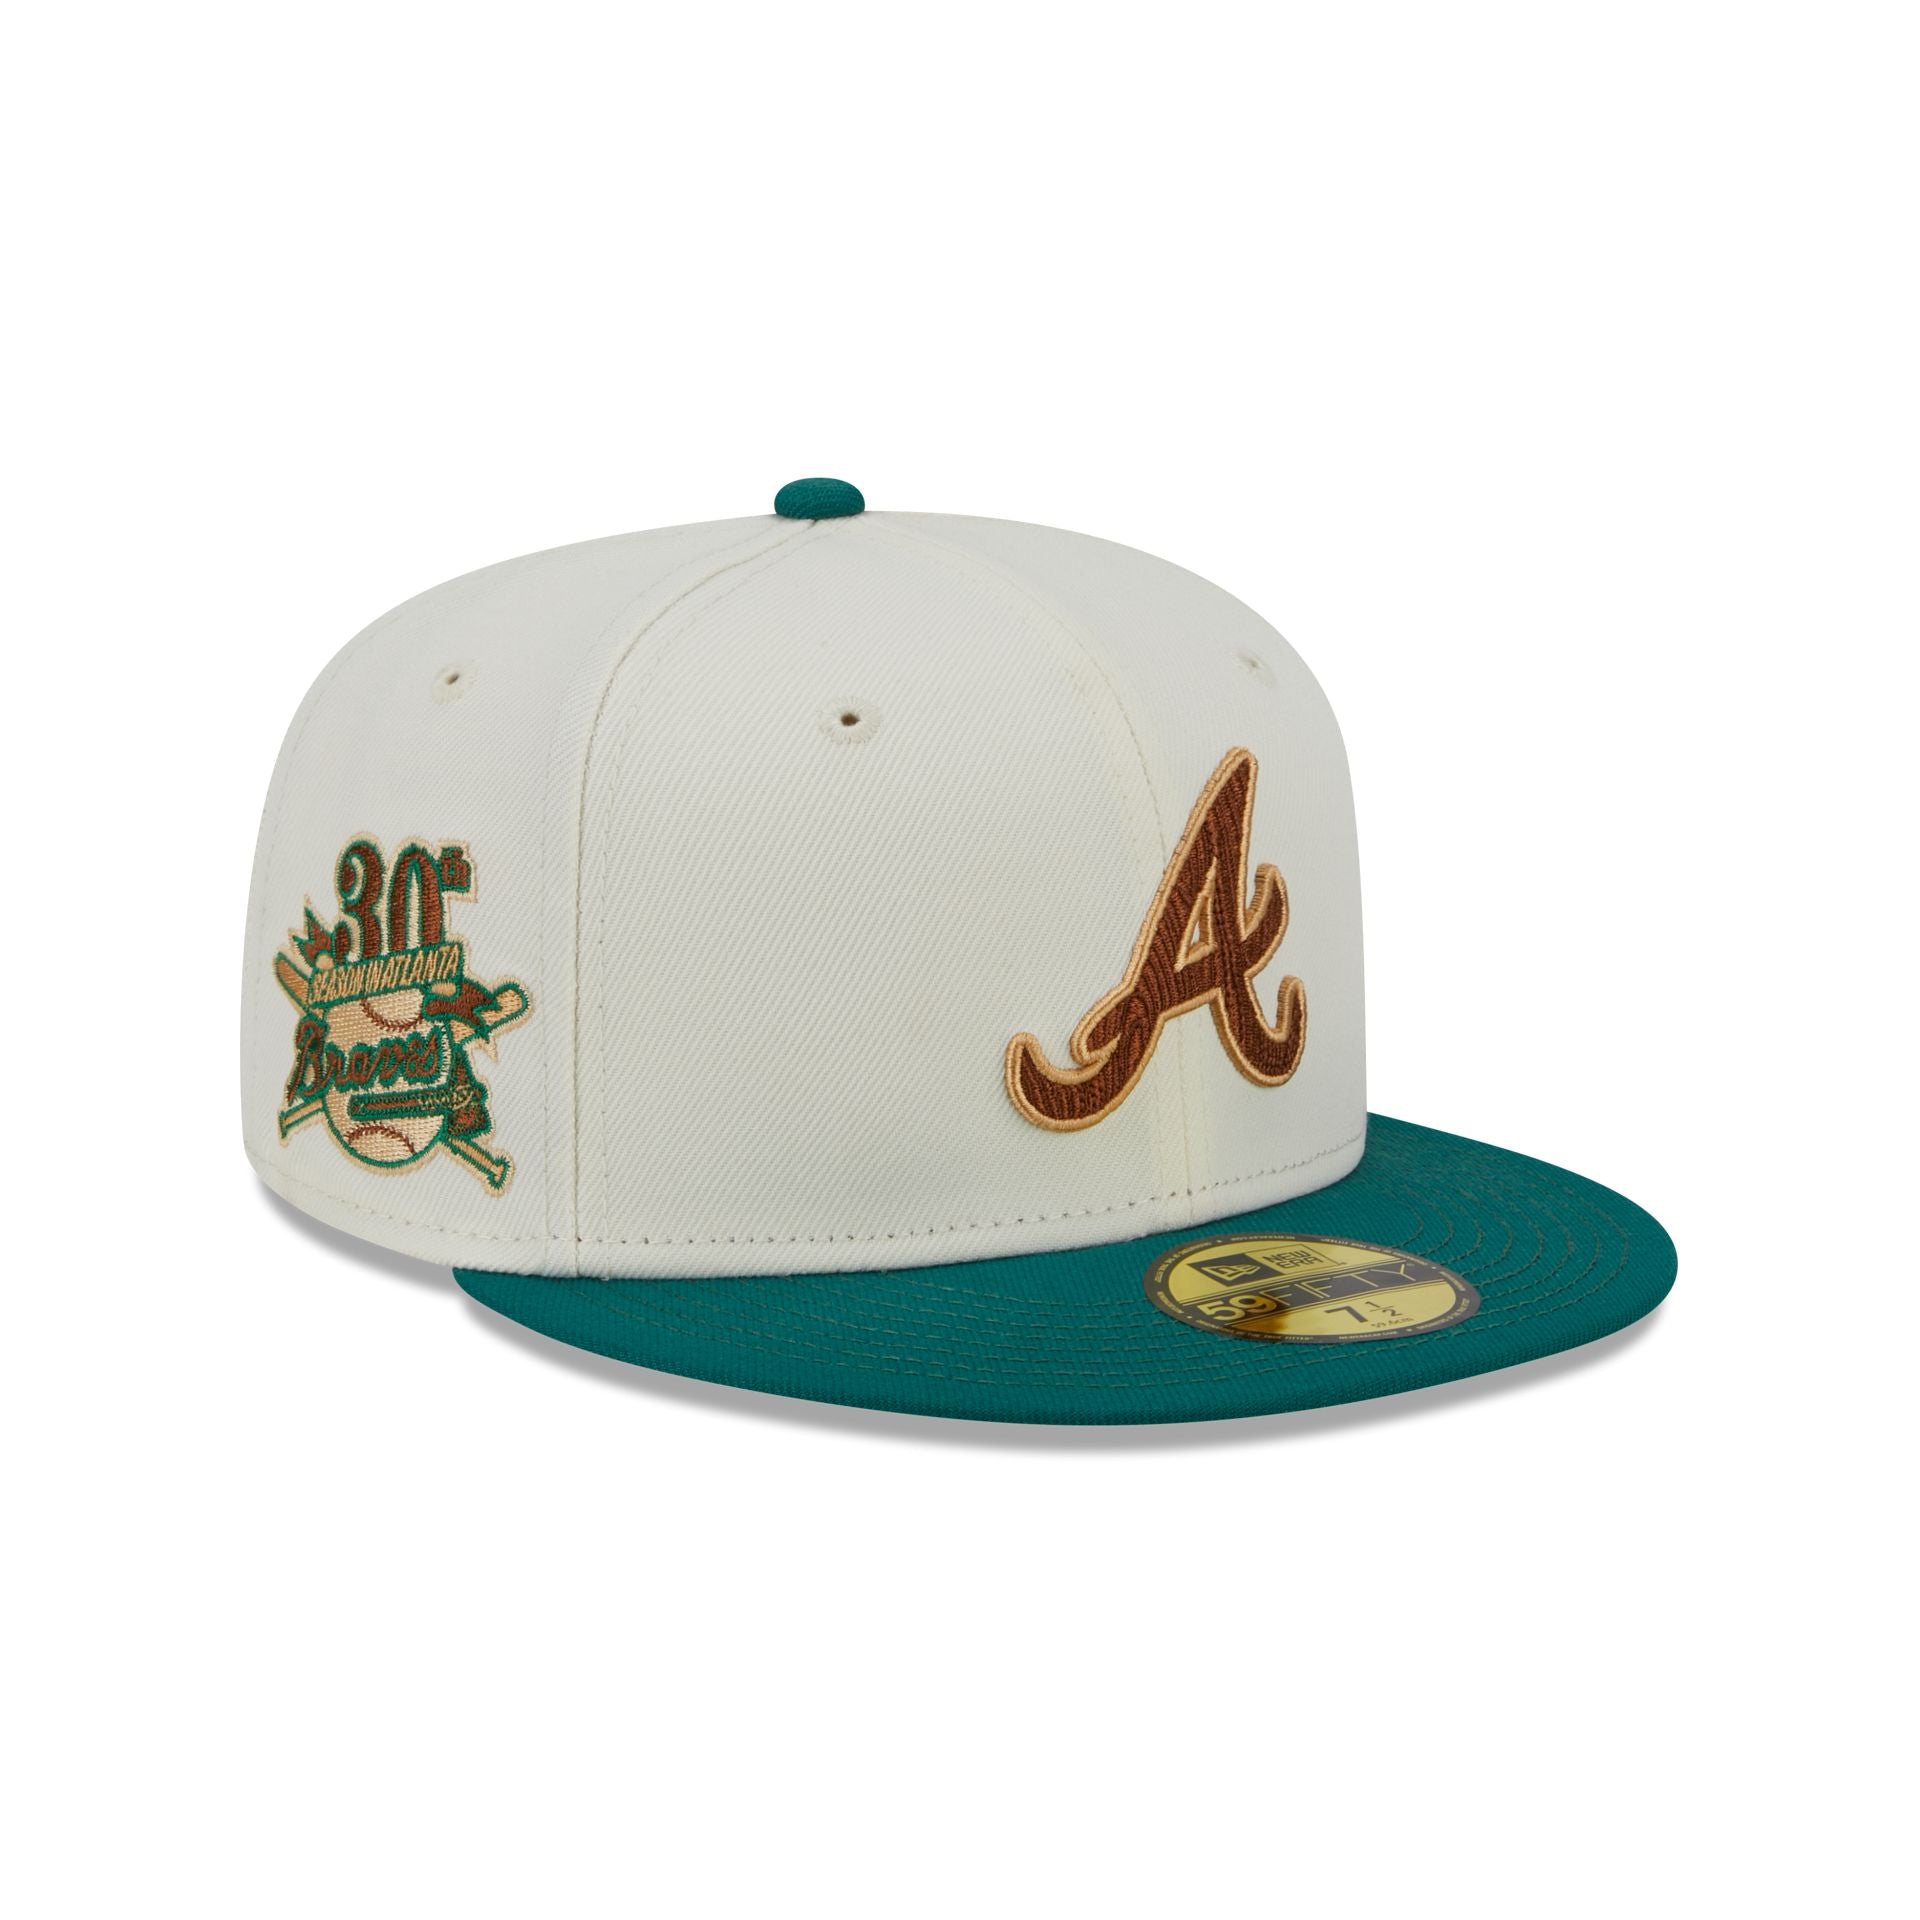 New Era Men's Atlanta Braves 59Fifty Road Navy Authentic Hat